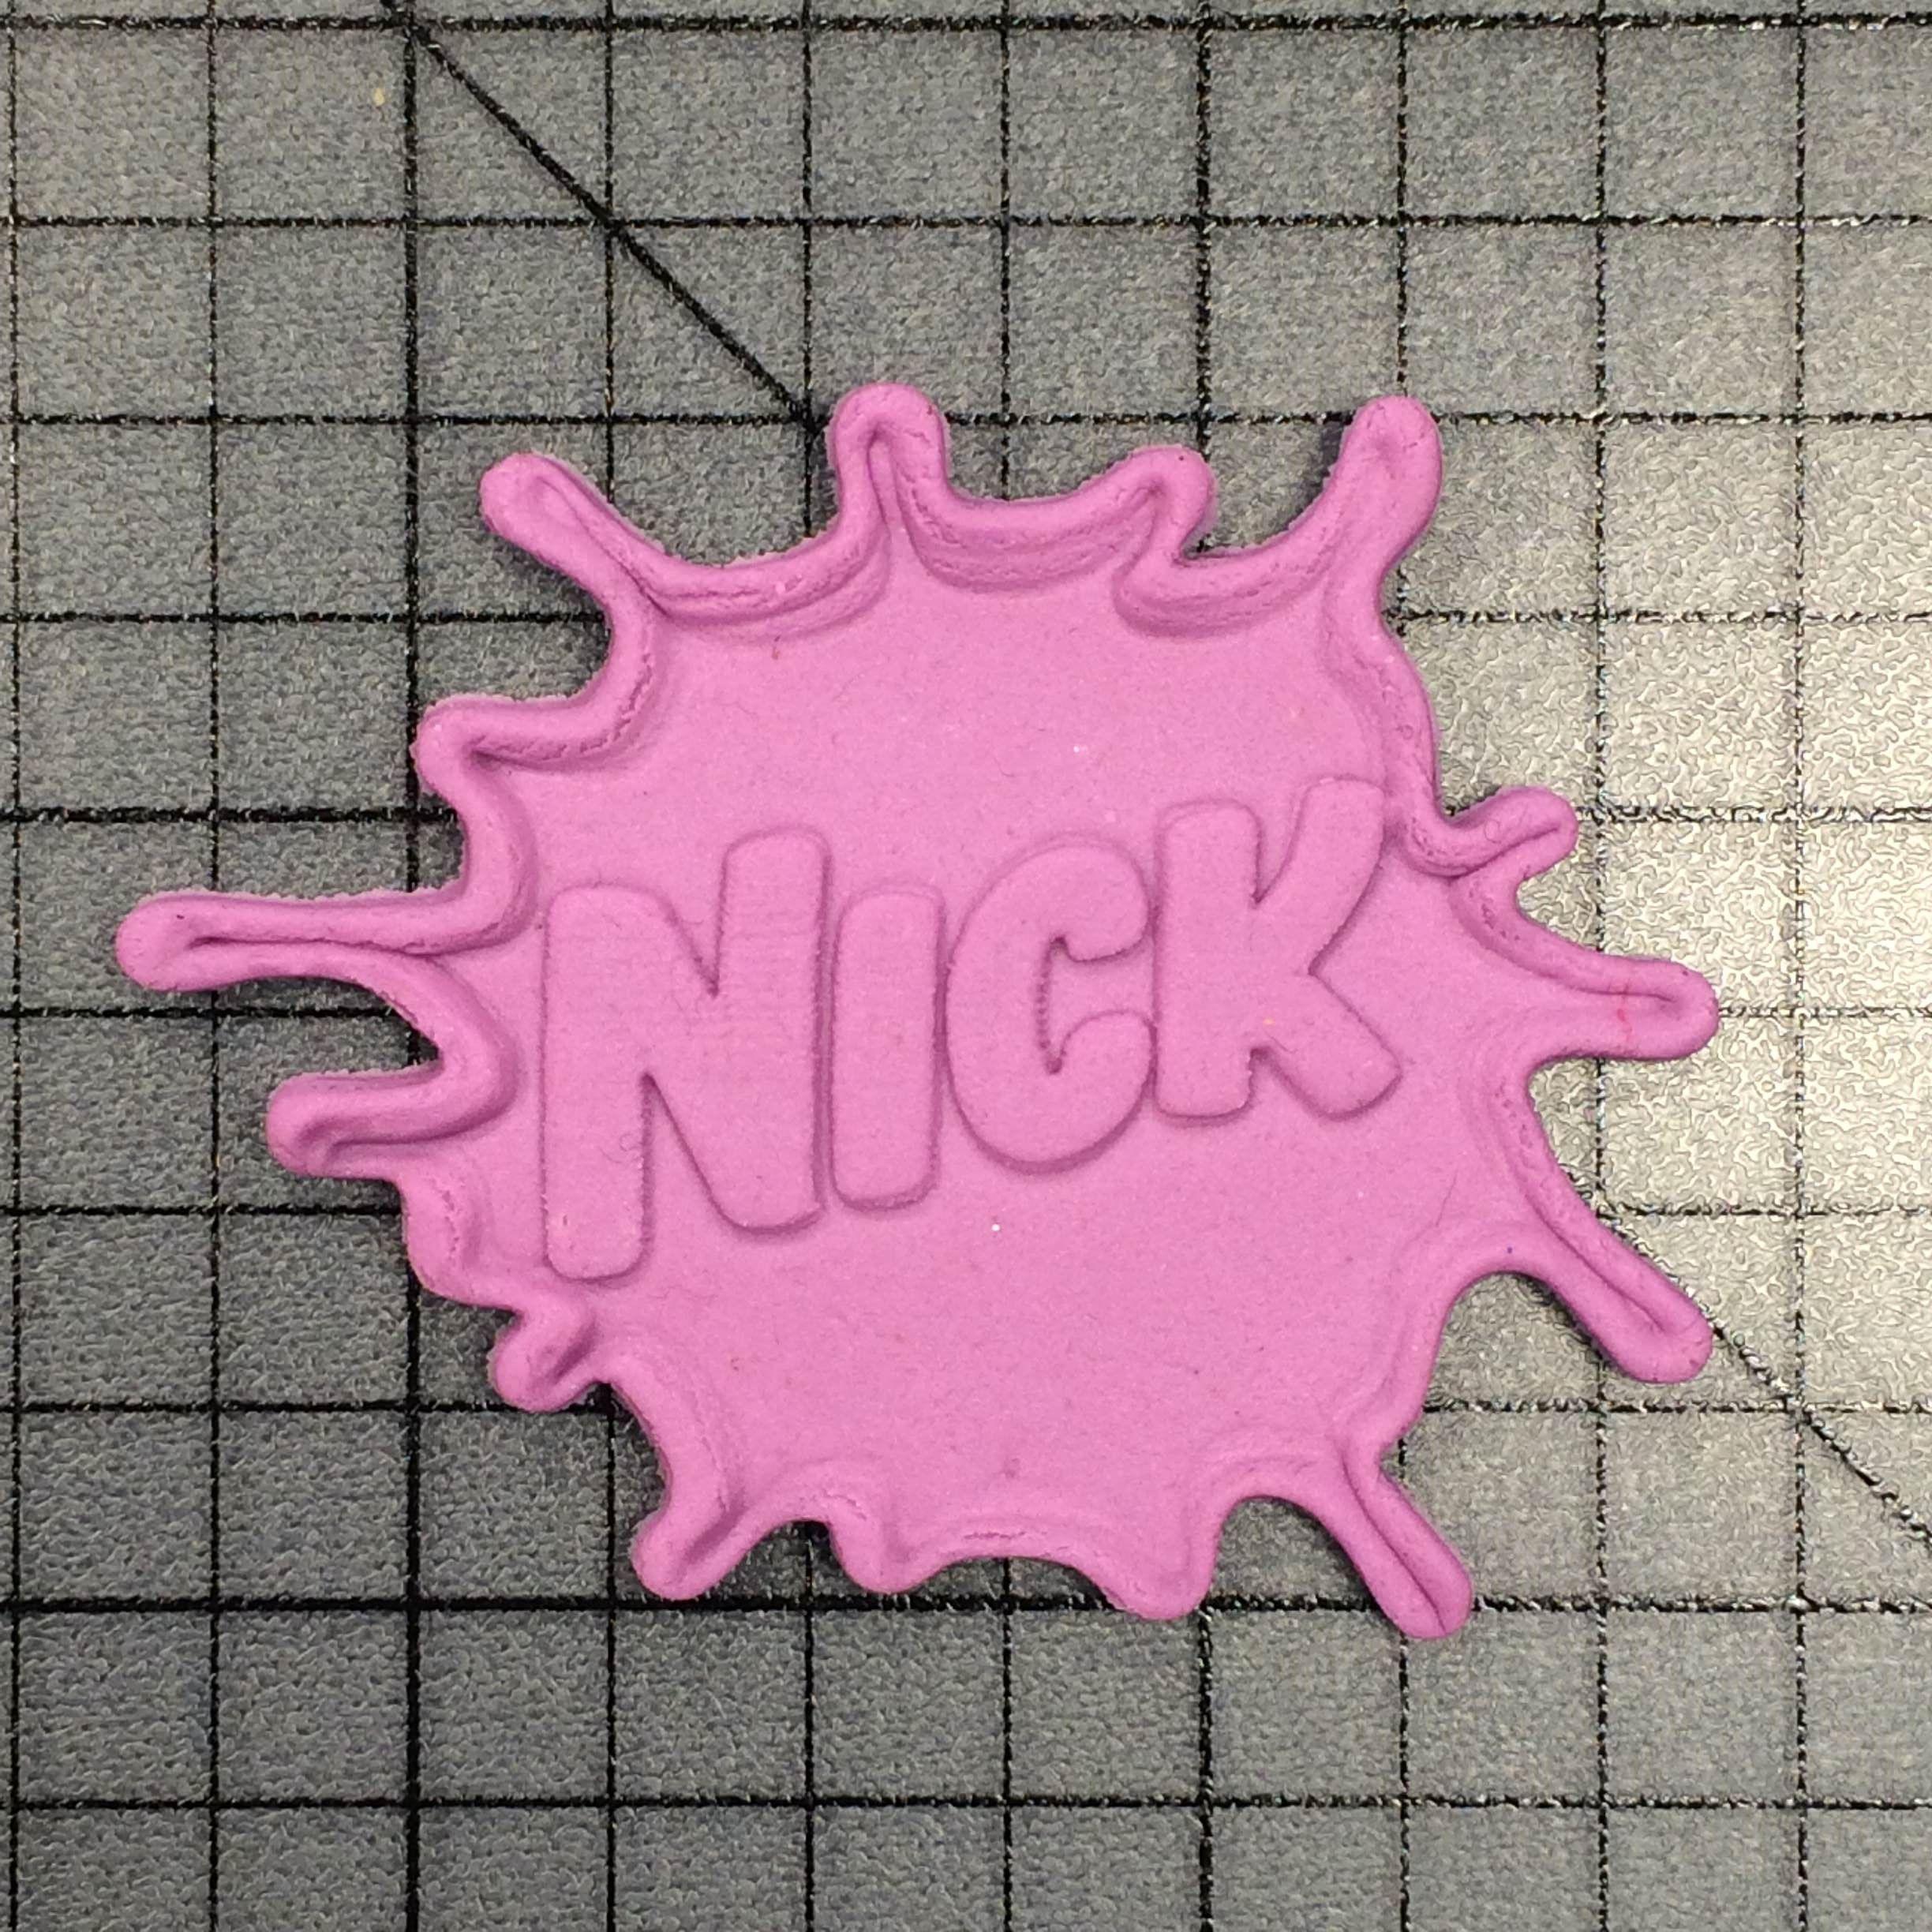 Nickelodeon Logo - Nickelodeon Logo 100 Cookie Cutter and Stamp